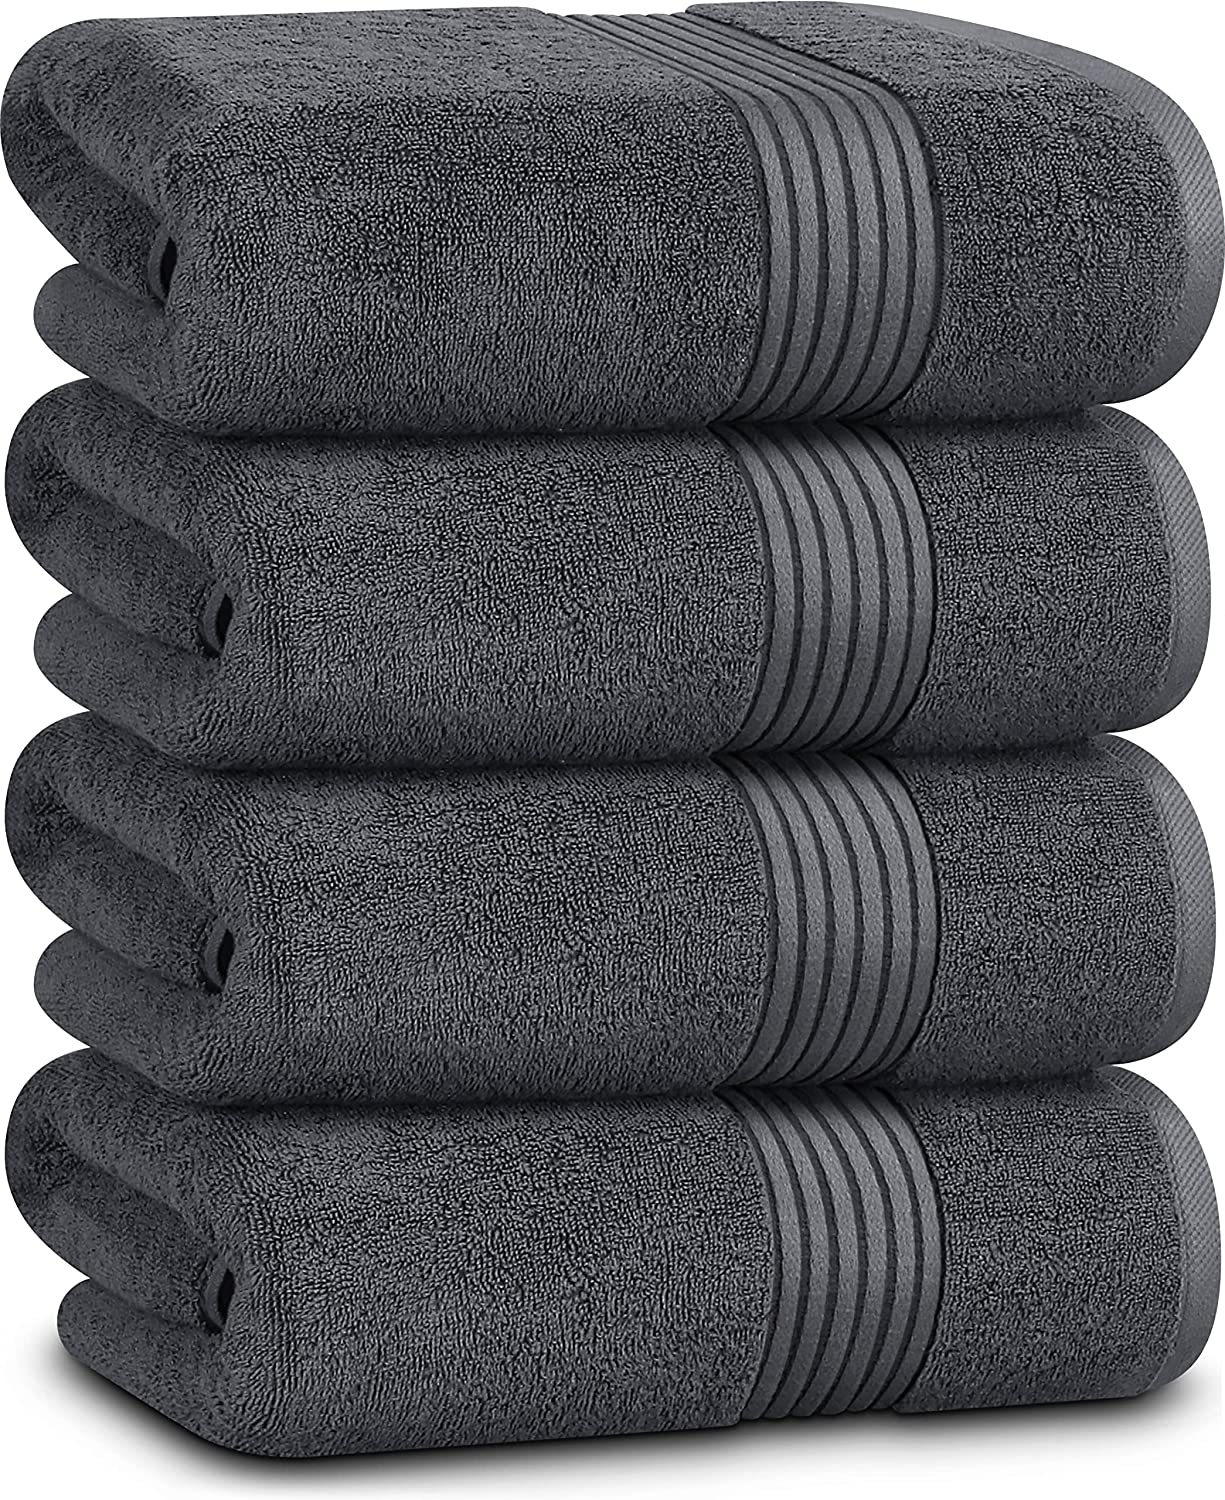 https://www.dontwasteyourmoney.com/wp-content/uploads/2020/08/utopia-towels-ring-spun-cotton-bath-towel-set-4-pack.jpg